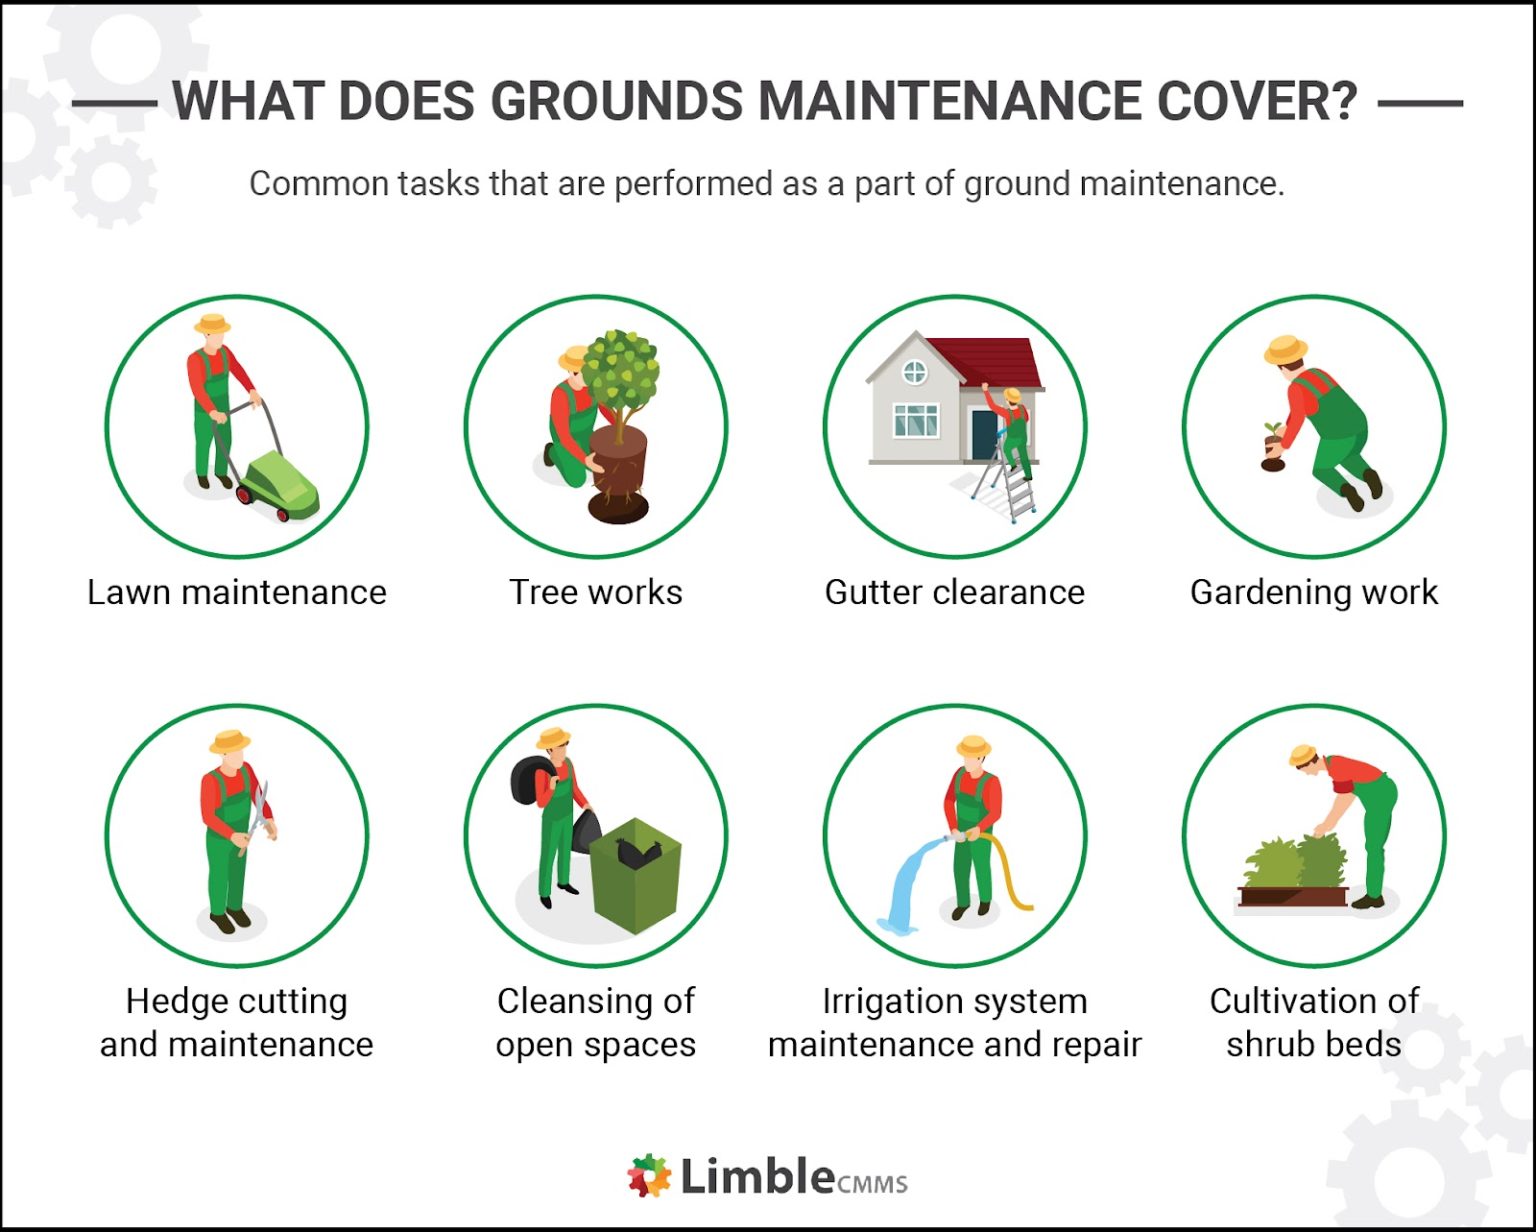 Streamlining Building Maintenance Tips for Grounds Upkeep